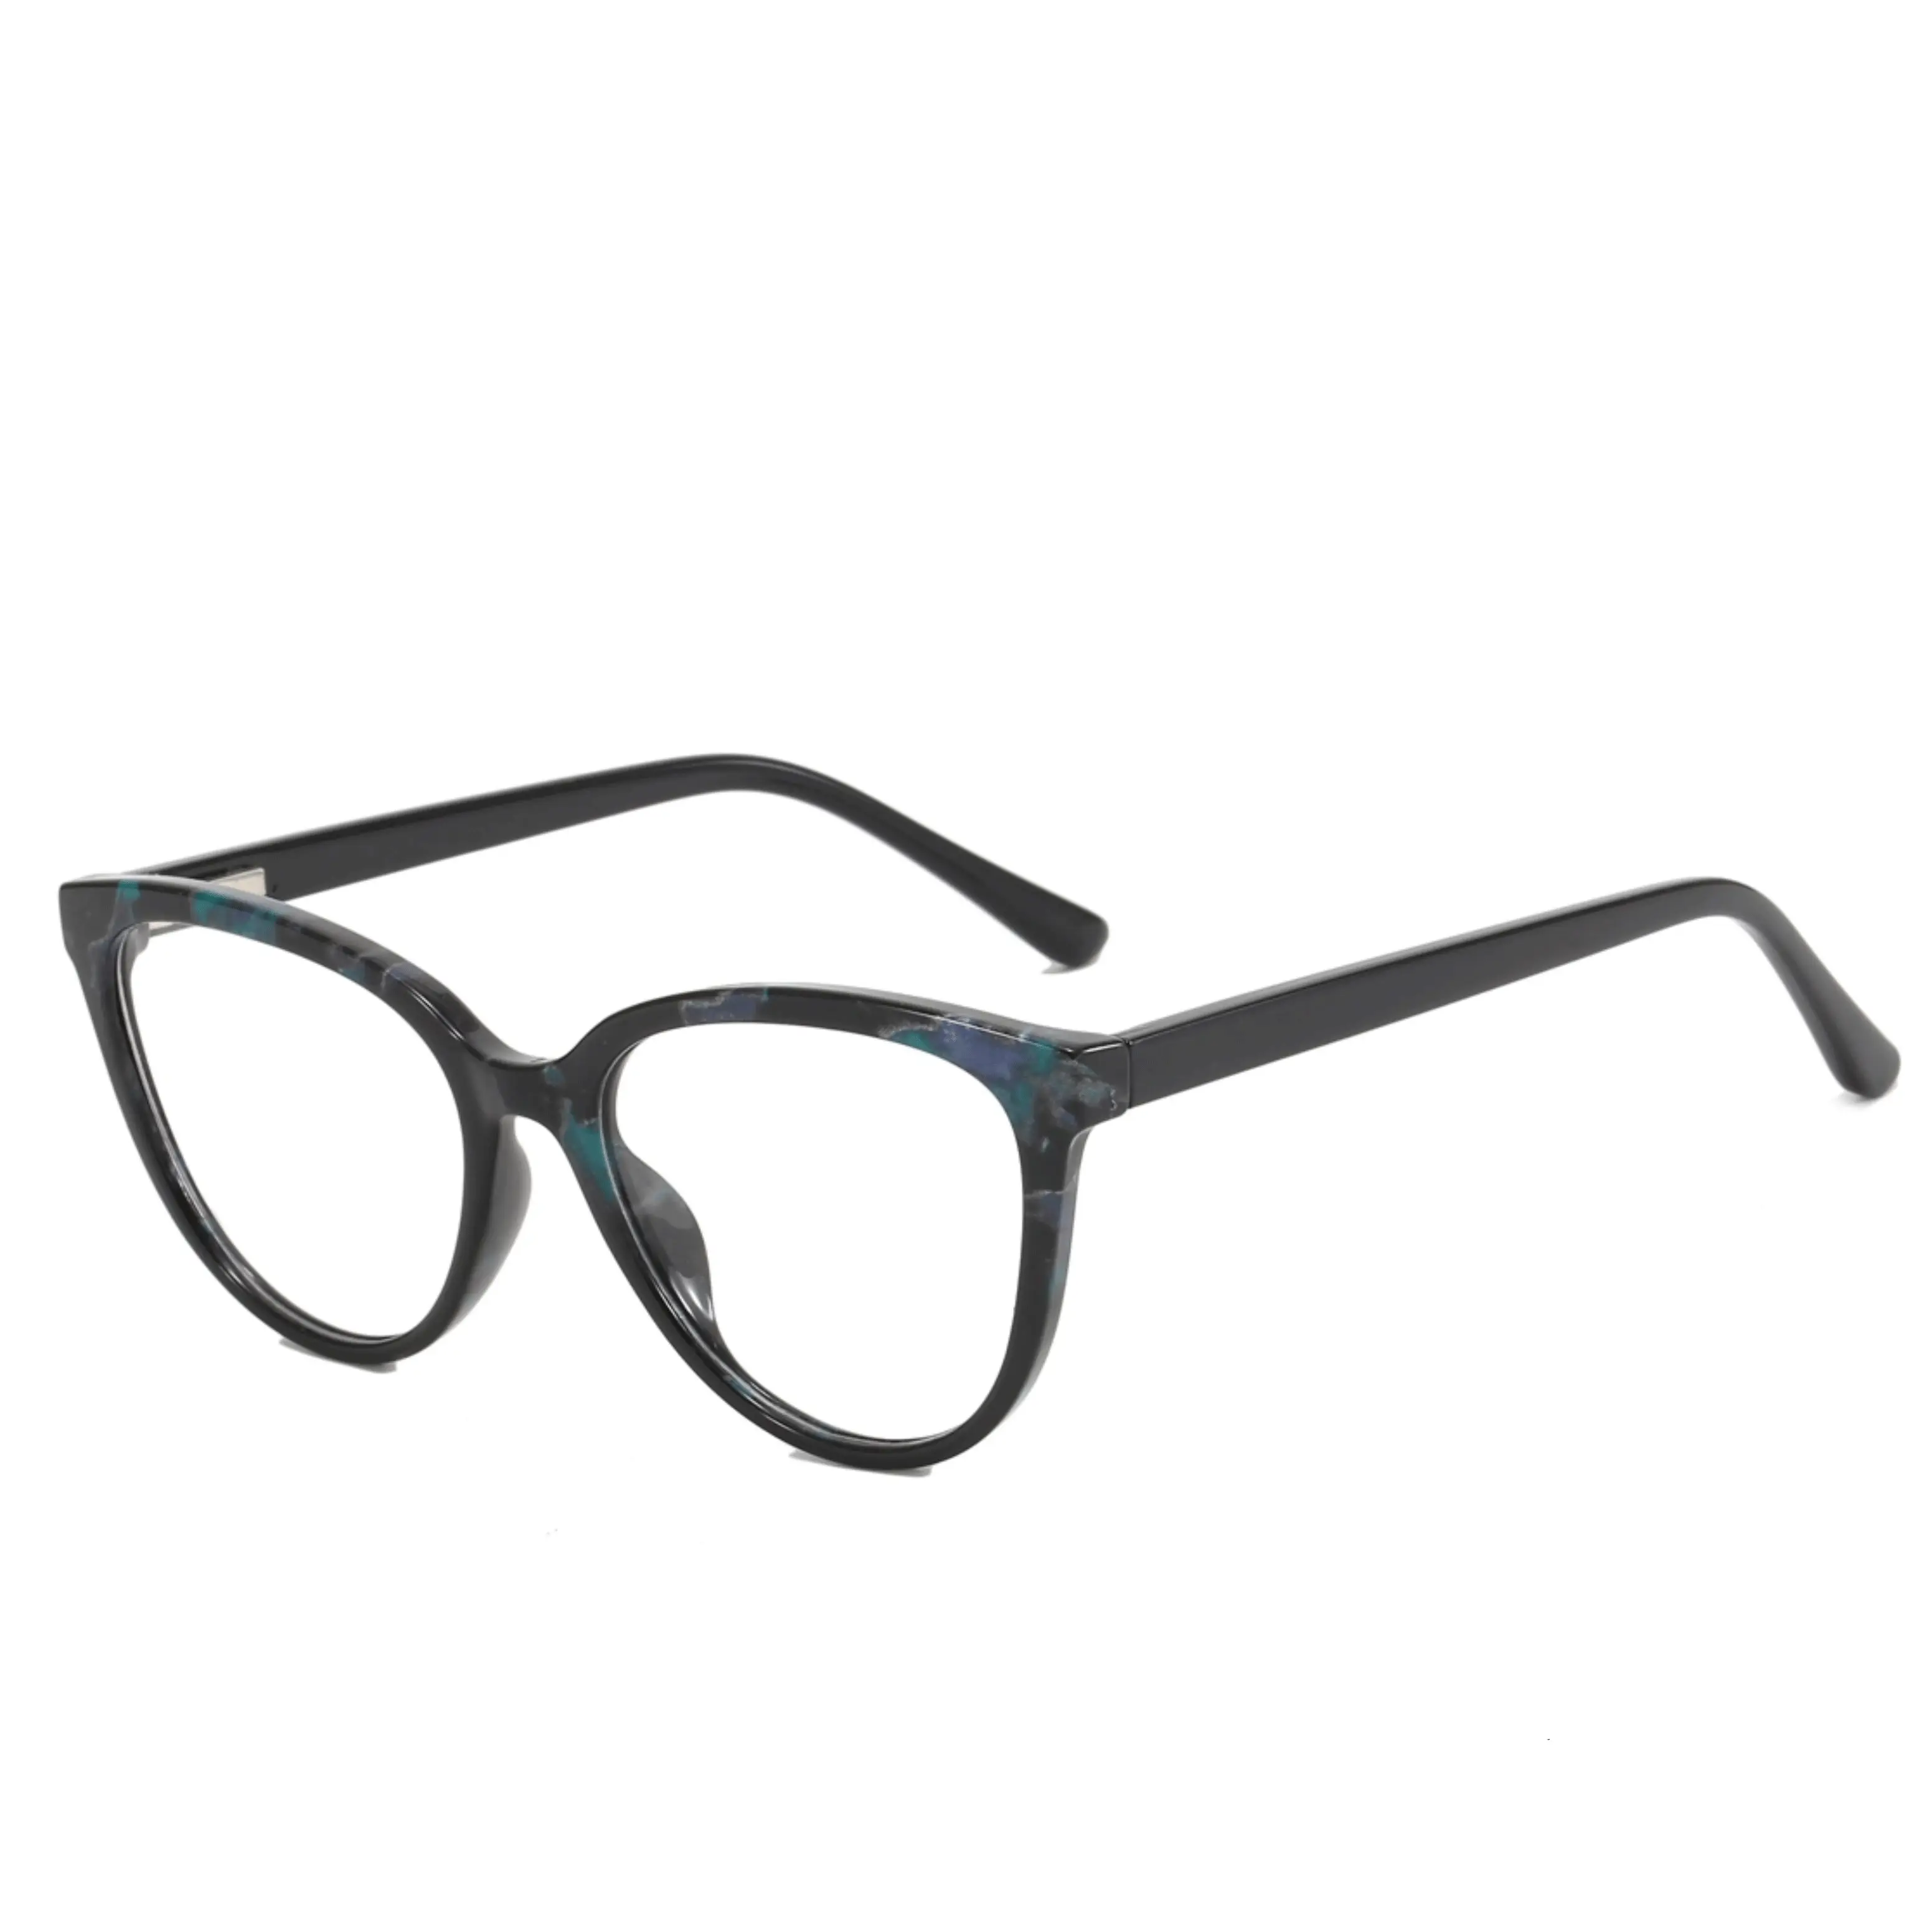 Accessori per occhiali da lettura alla moda anti luce blu unisex blu luce blu che blocca gli occhiali da lettura progressivi